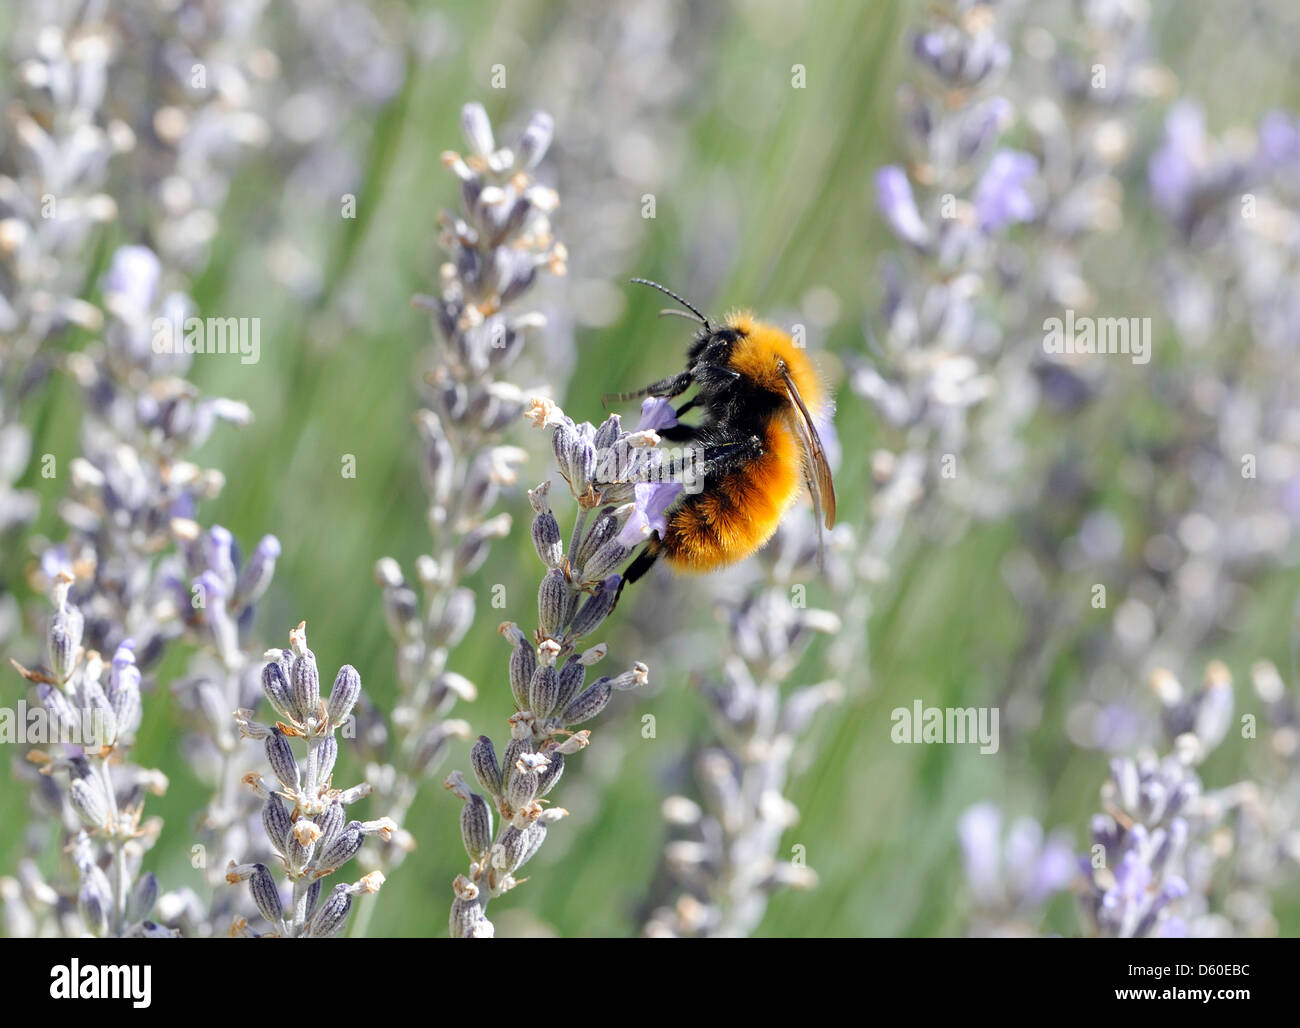 The Patagonian Bumblebee (Bombus dahlbomii) on lavender flowers. Stock Photo